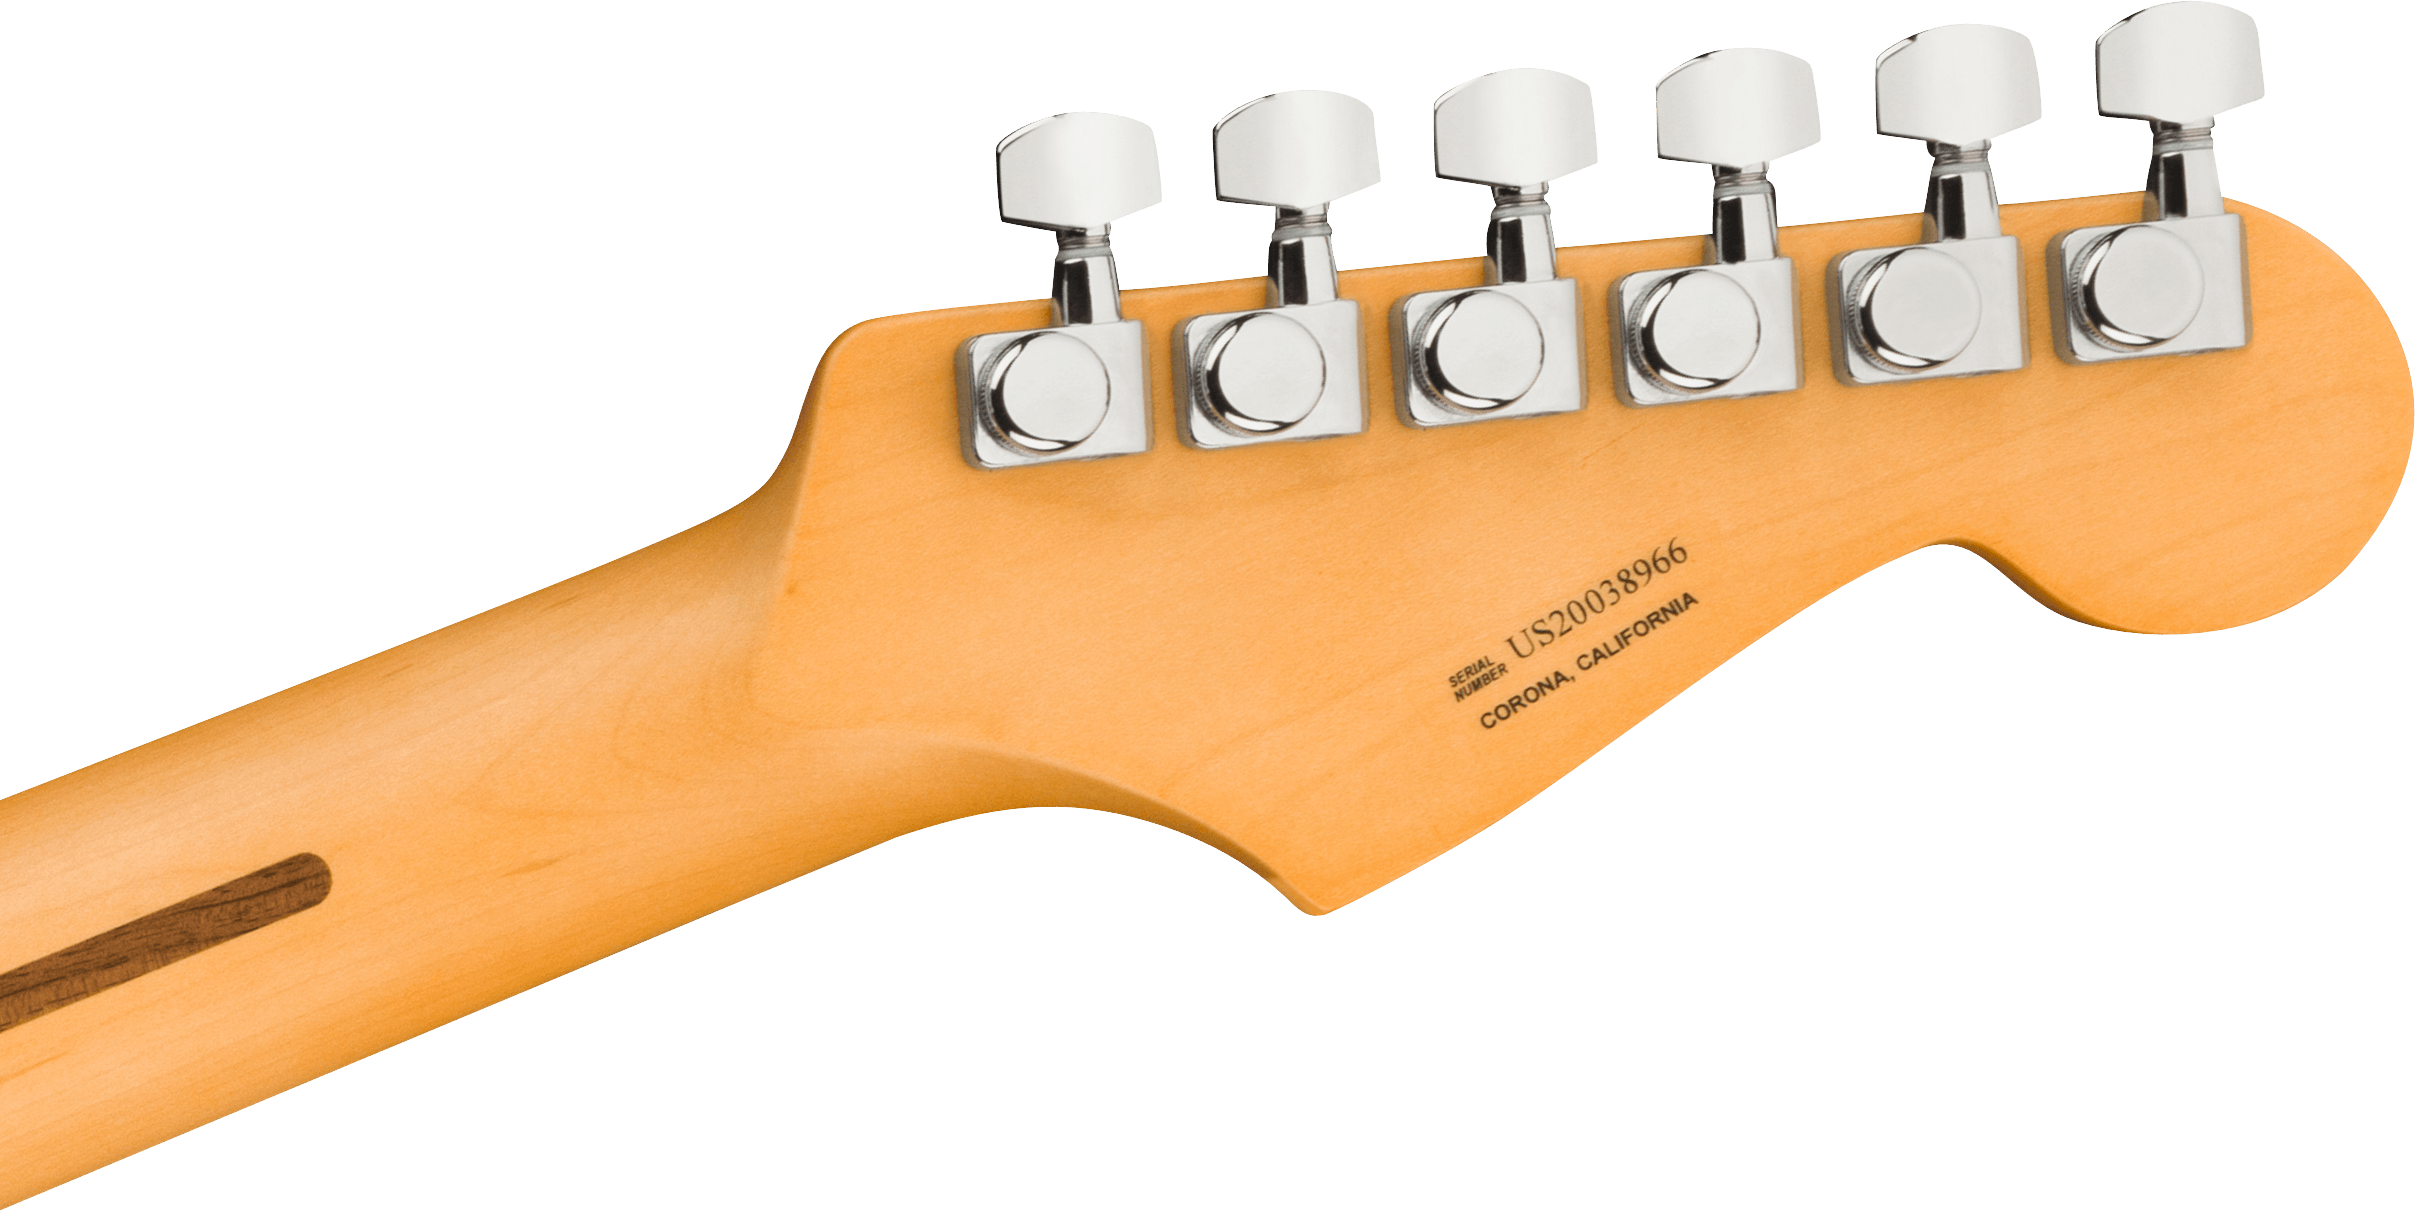 American Ultra Stratocaster Left-Hand Maple Fingerboard, Texas Tea